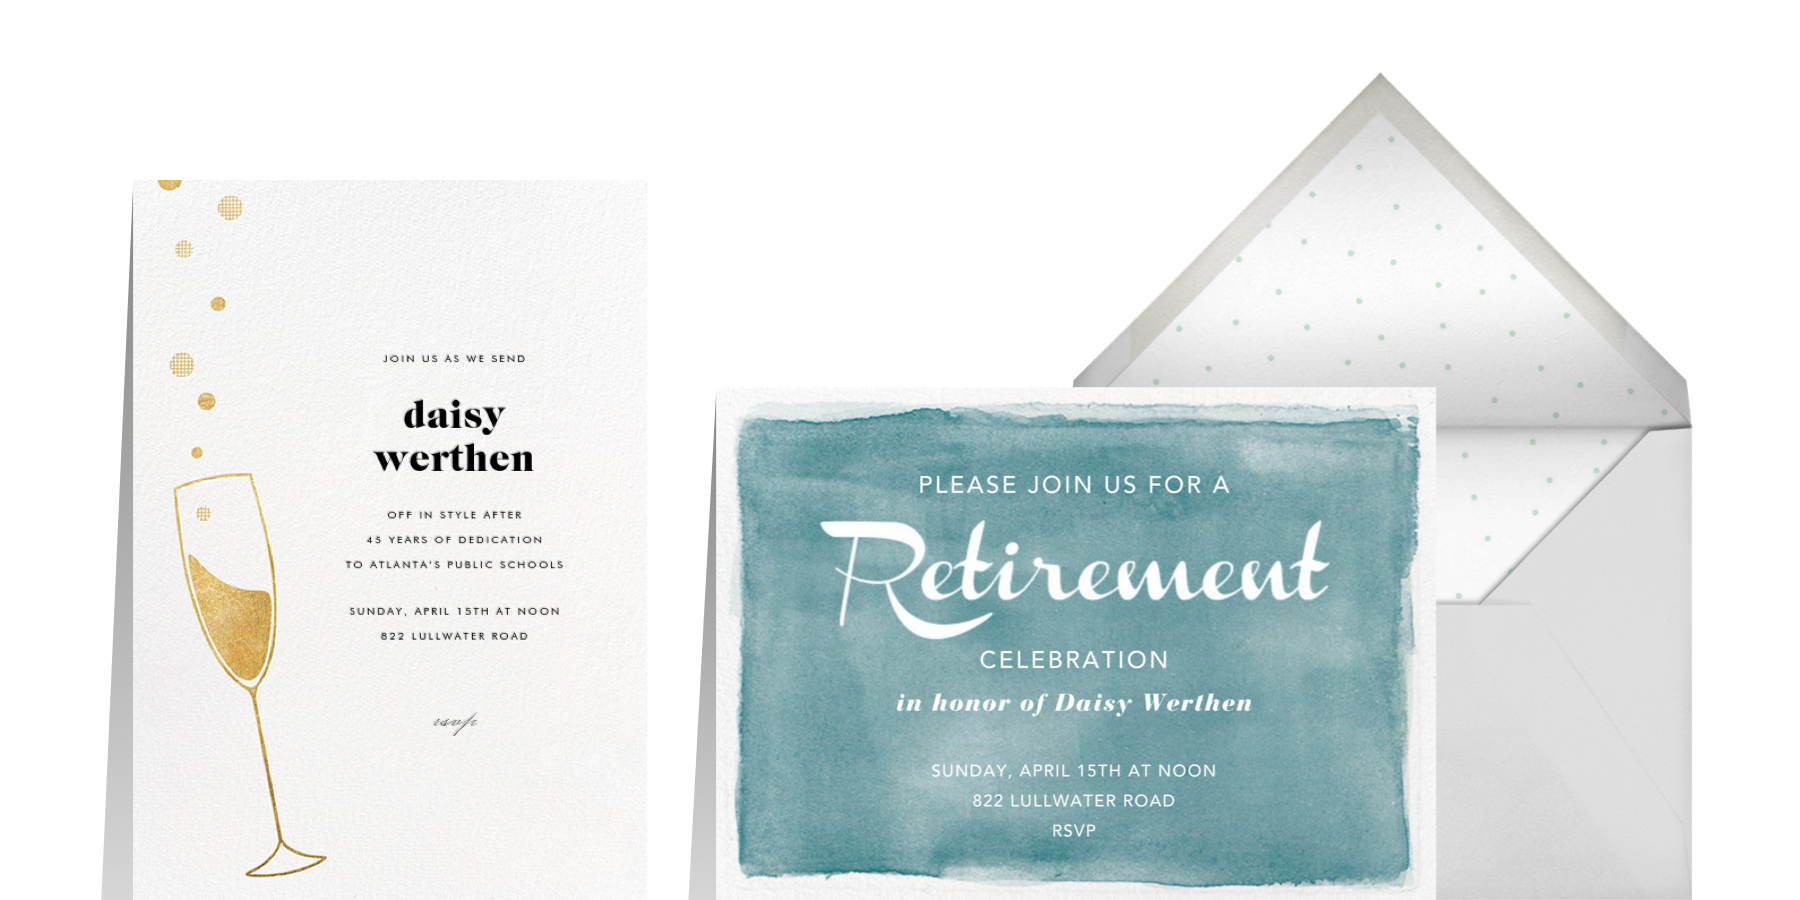 Retirement party invitations